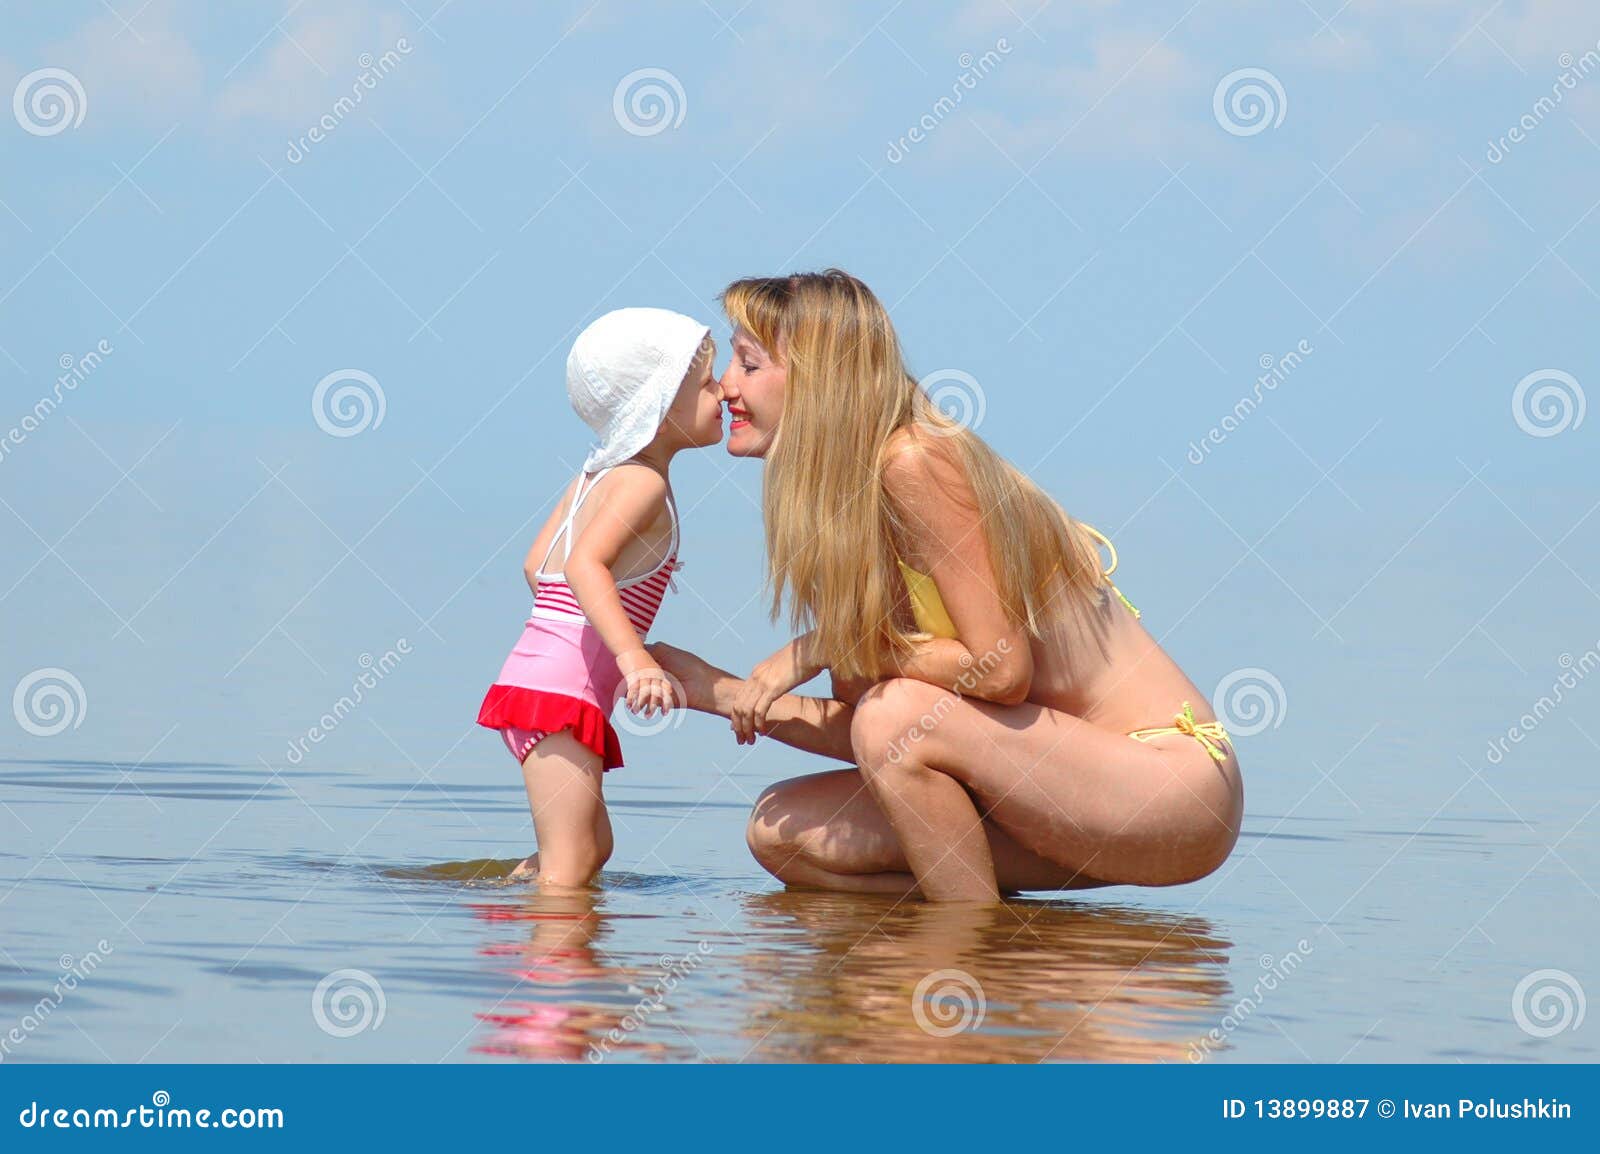 мама и дочка на голом пляже фото 73